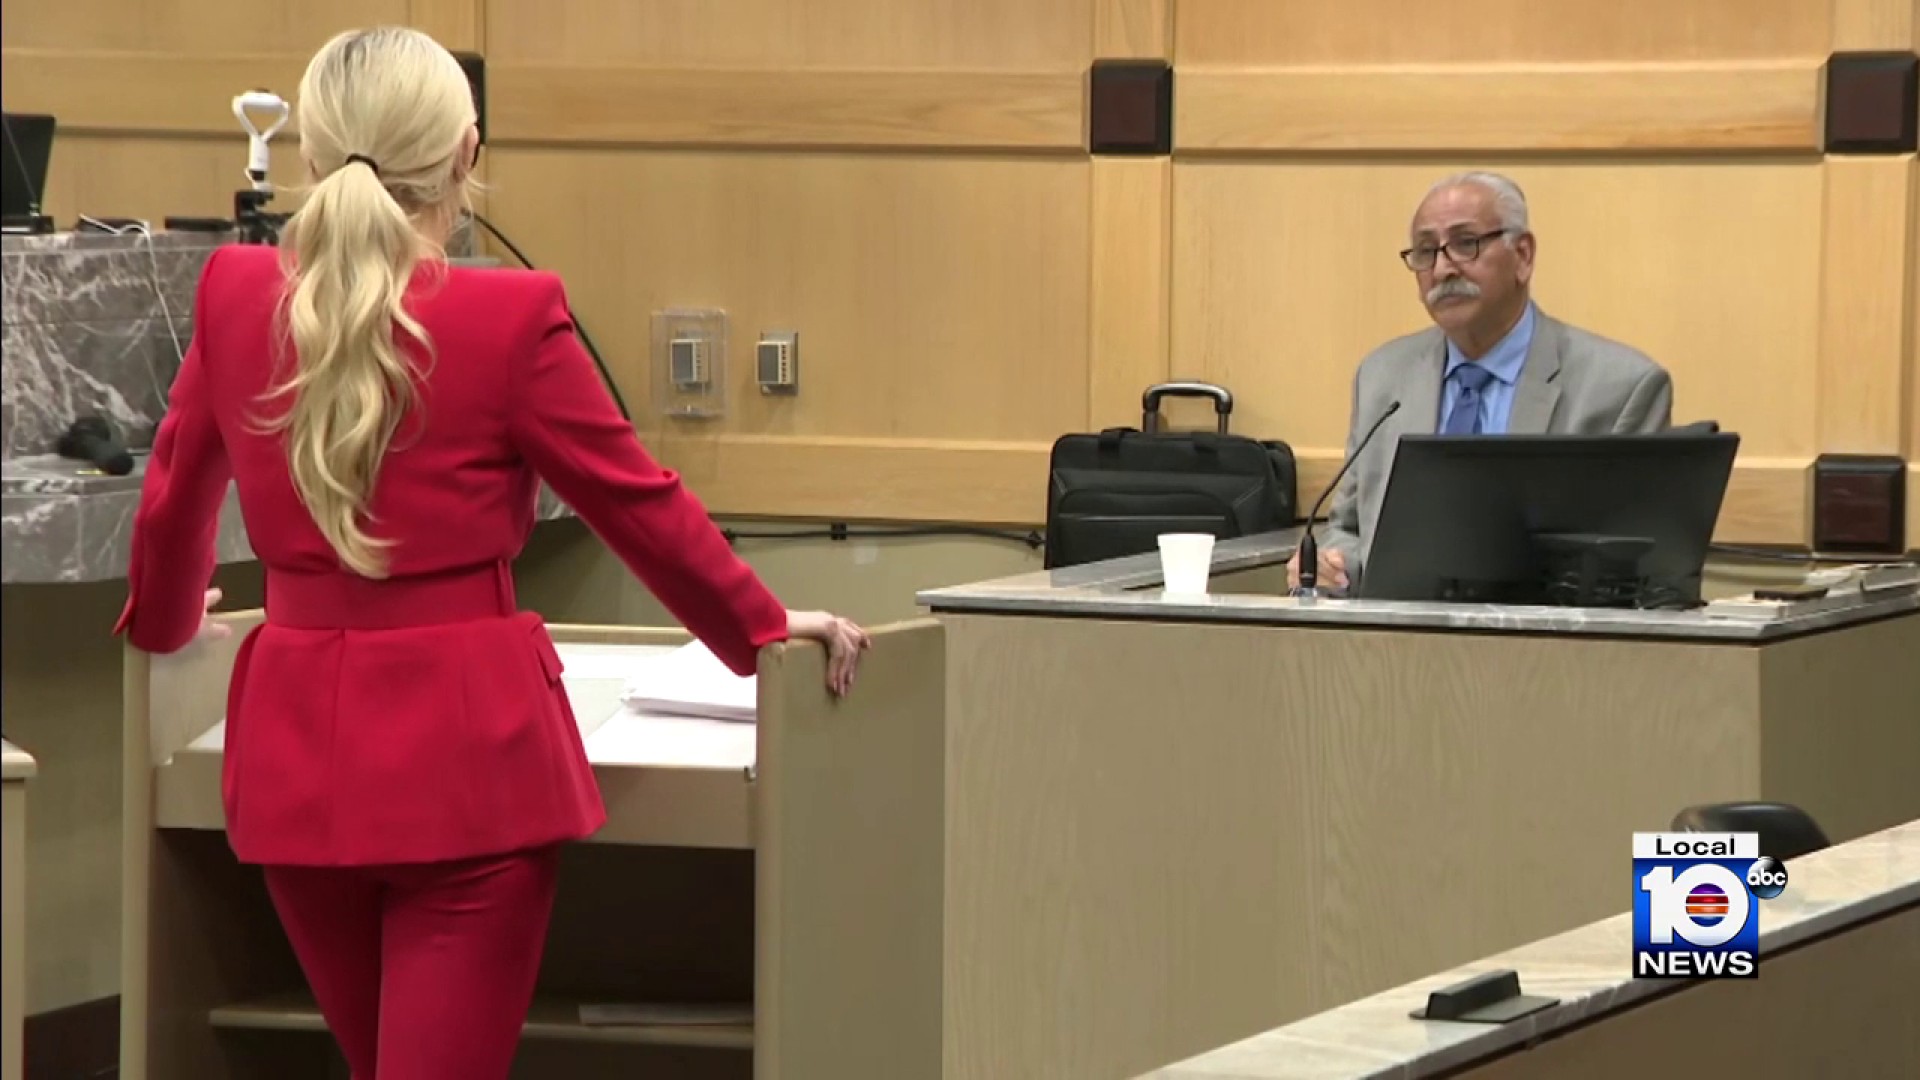 Breezer Com Pron Video - XXXTentacion murder: Here is what defense's gang expert wants to tell jury